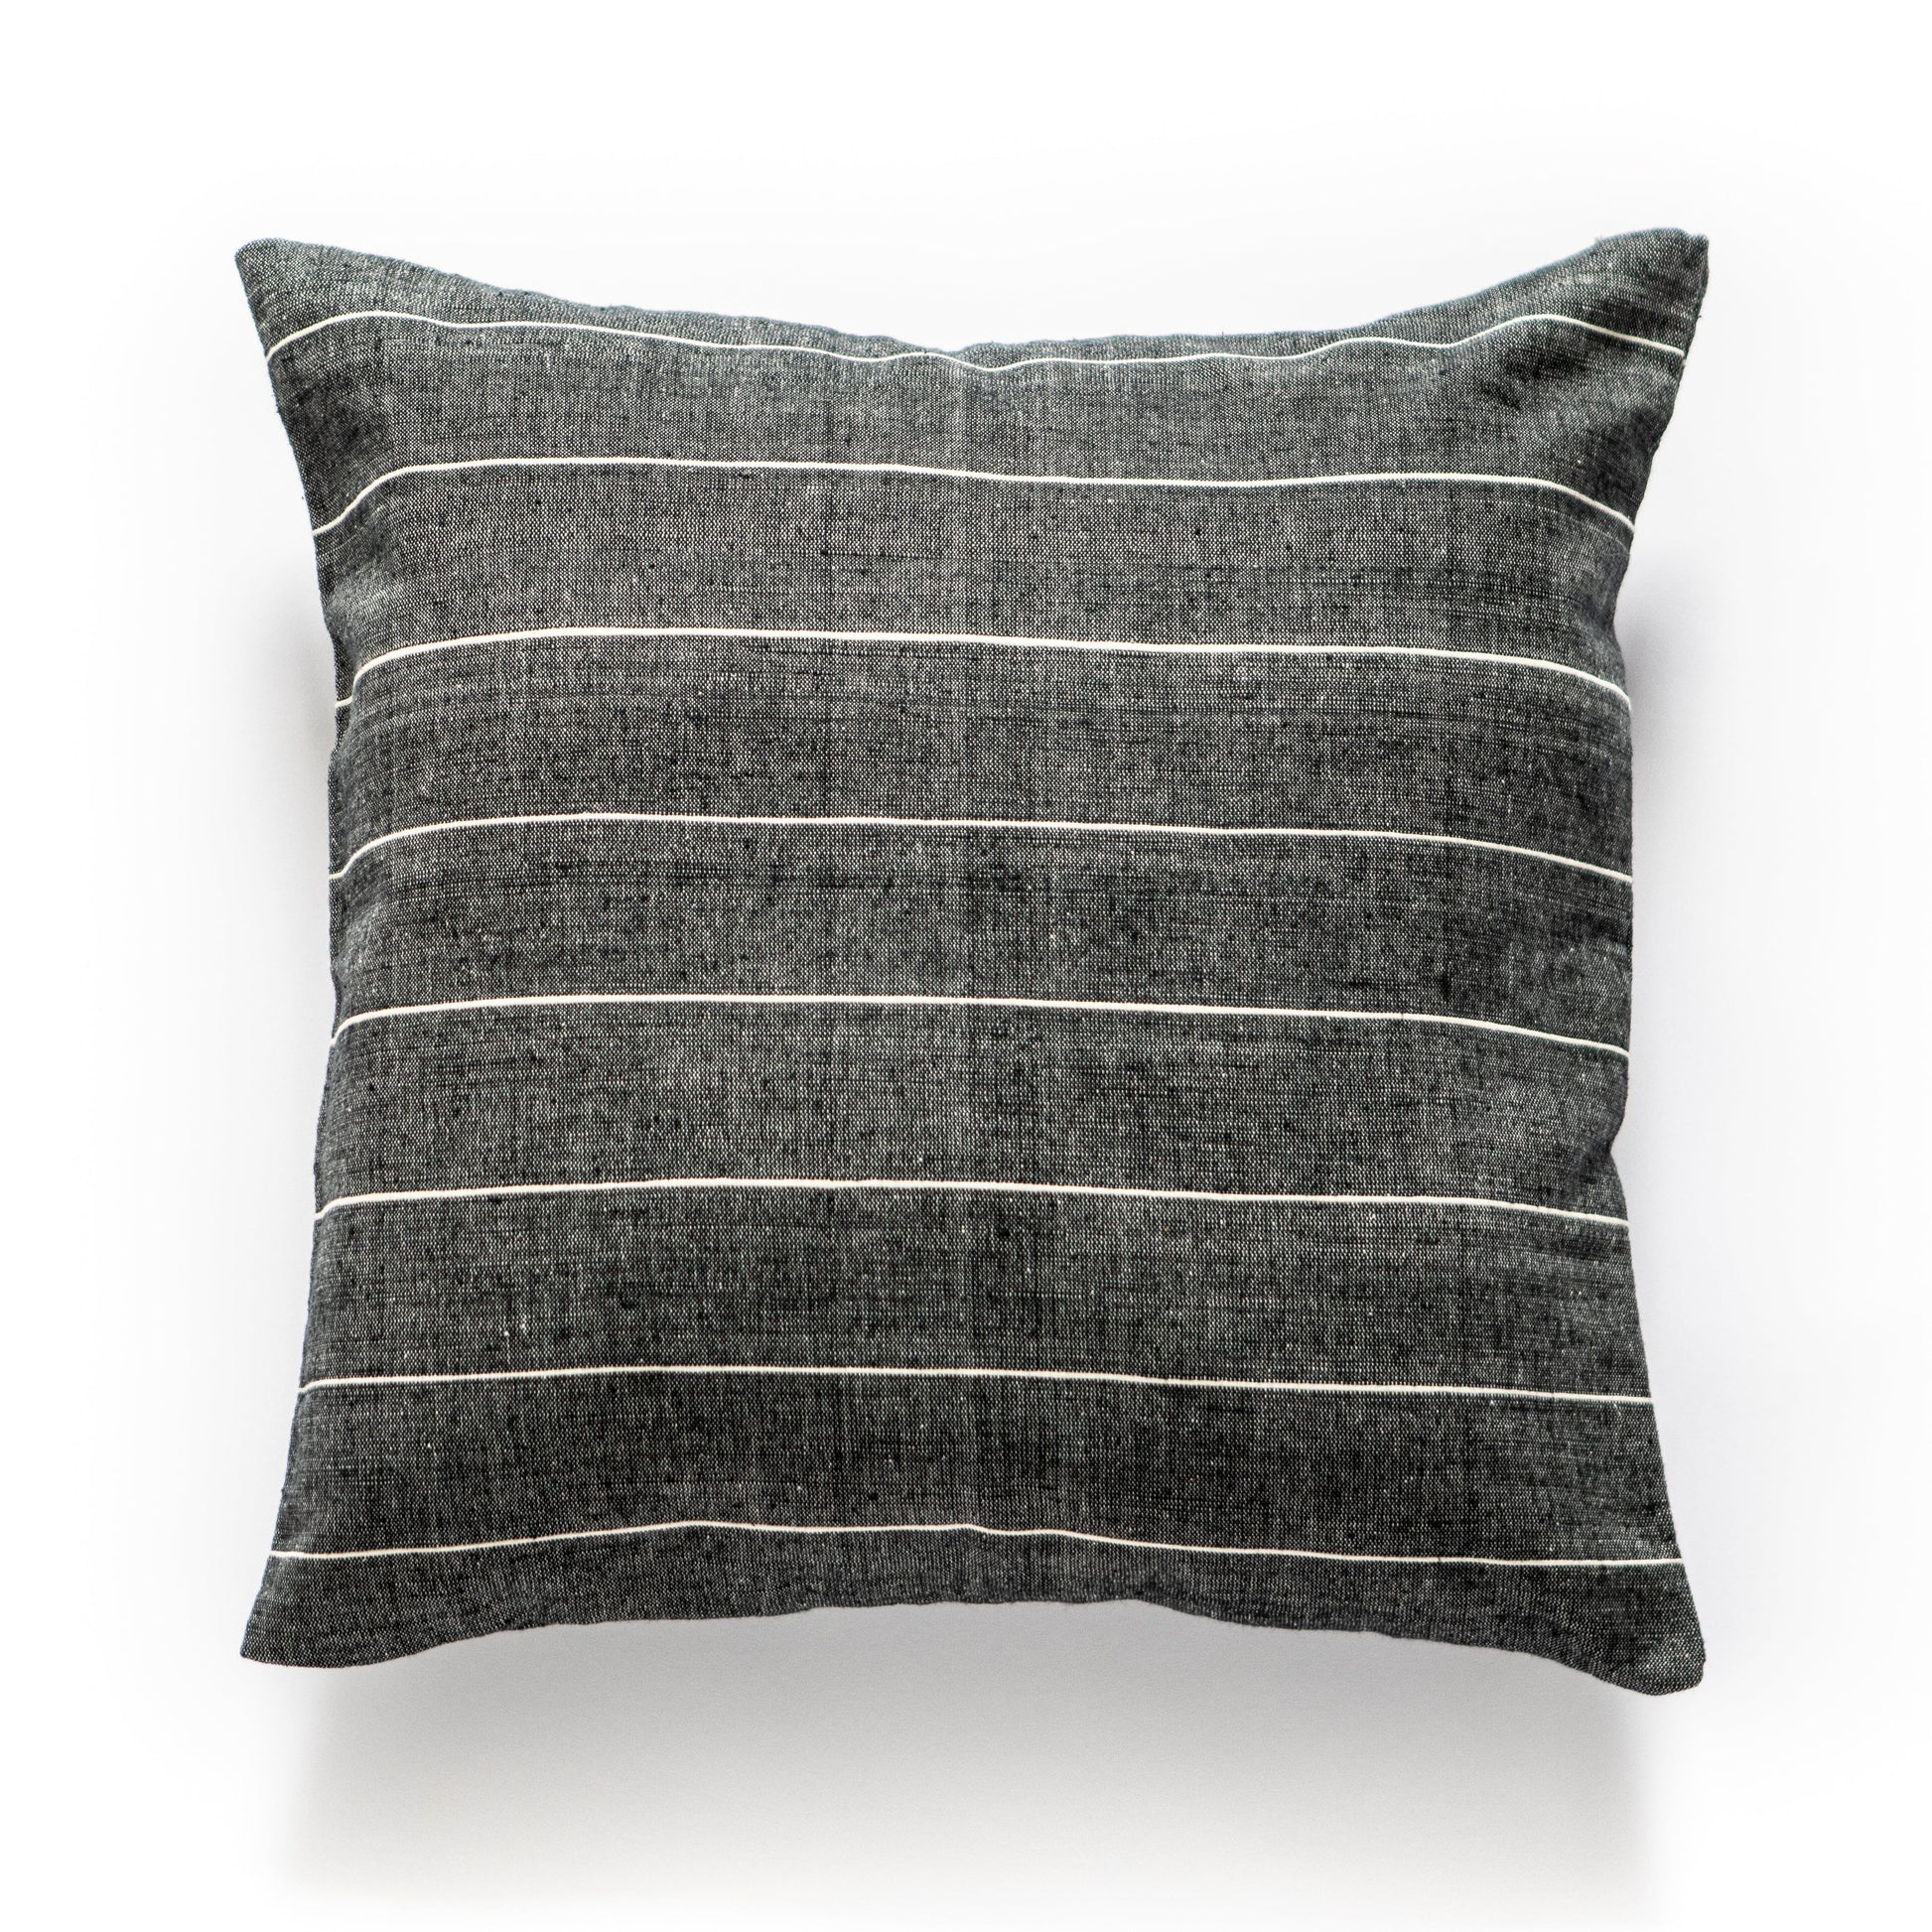 Adama cushion cushion sabahar Black/Natural 